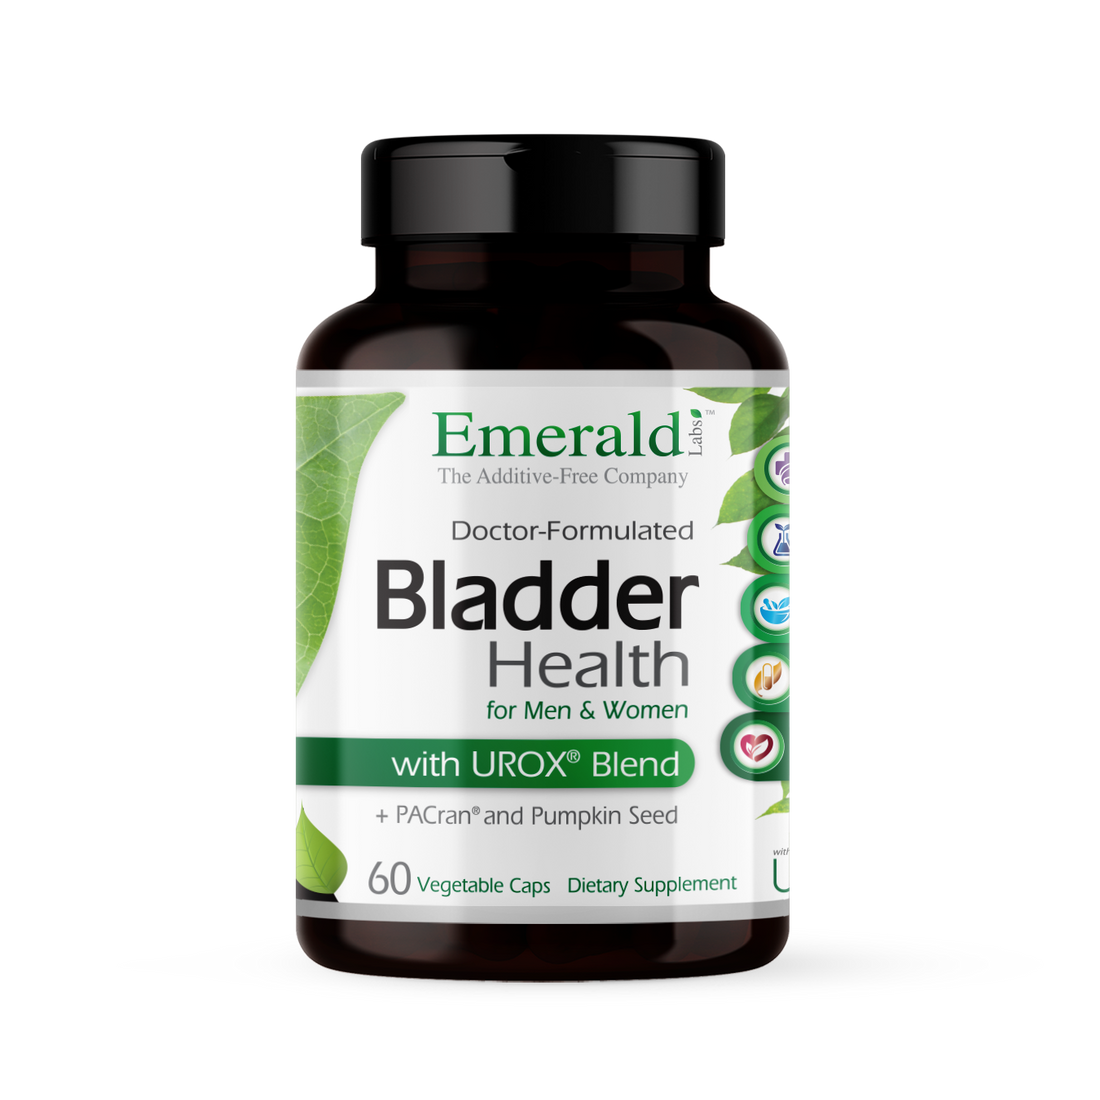 Bladder Health - Emerald Labs - 60 capsules